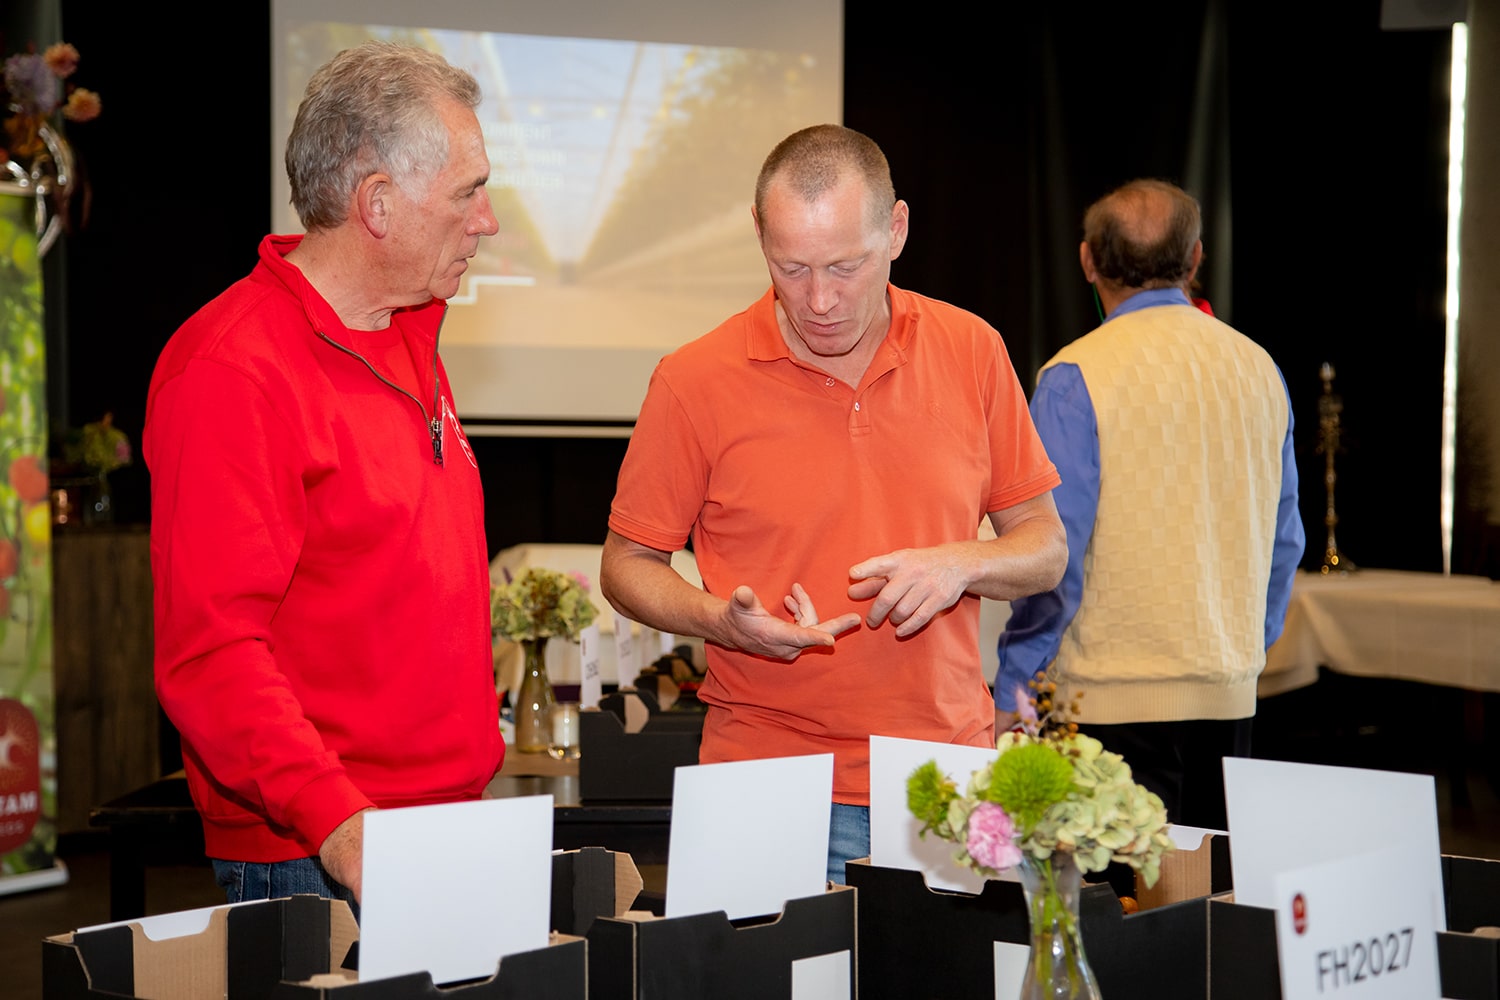 Totam Seeds meet Growers Event October 8th 2021, The Netherlands